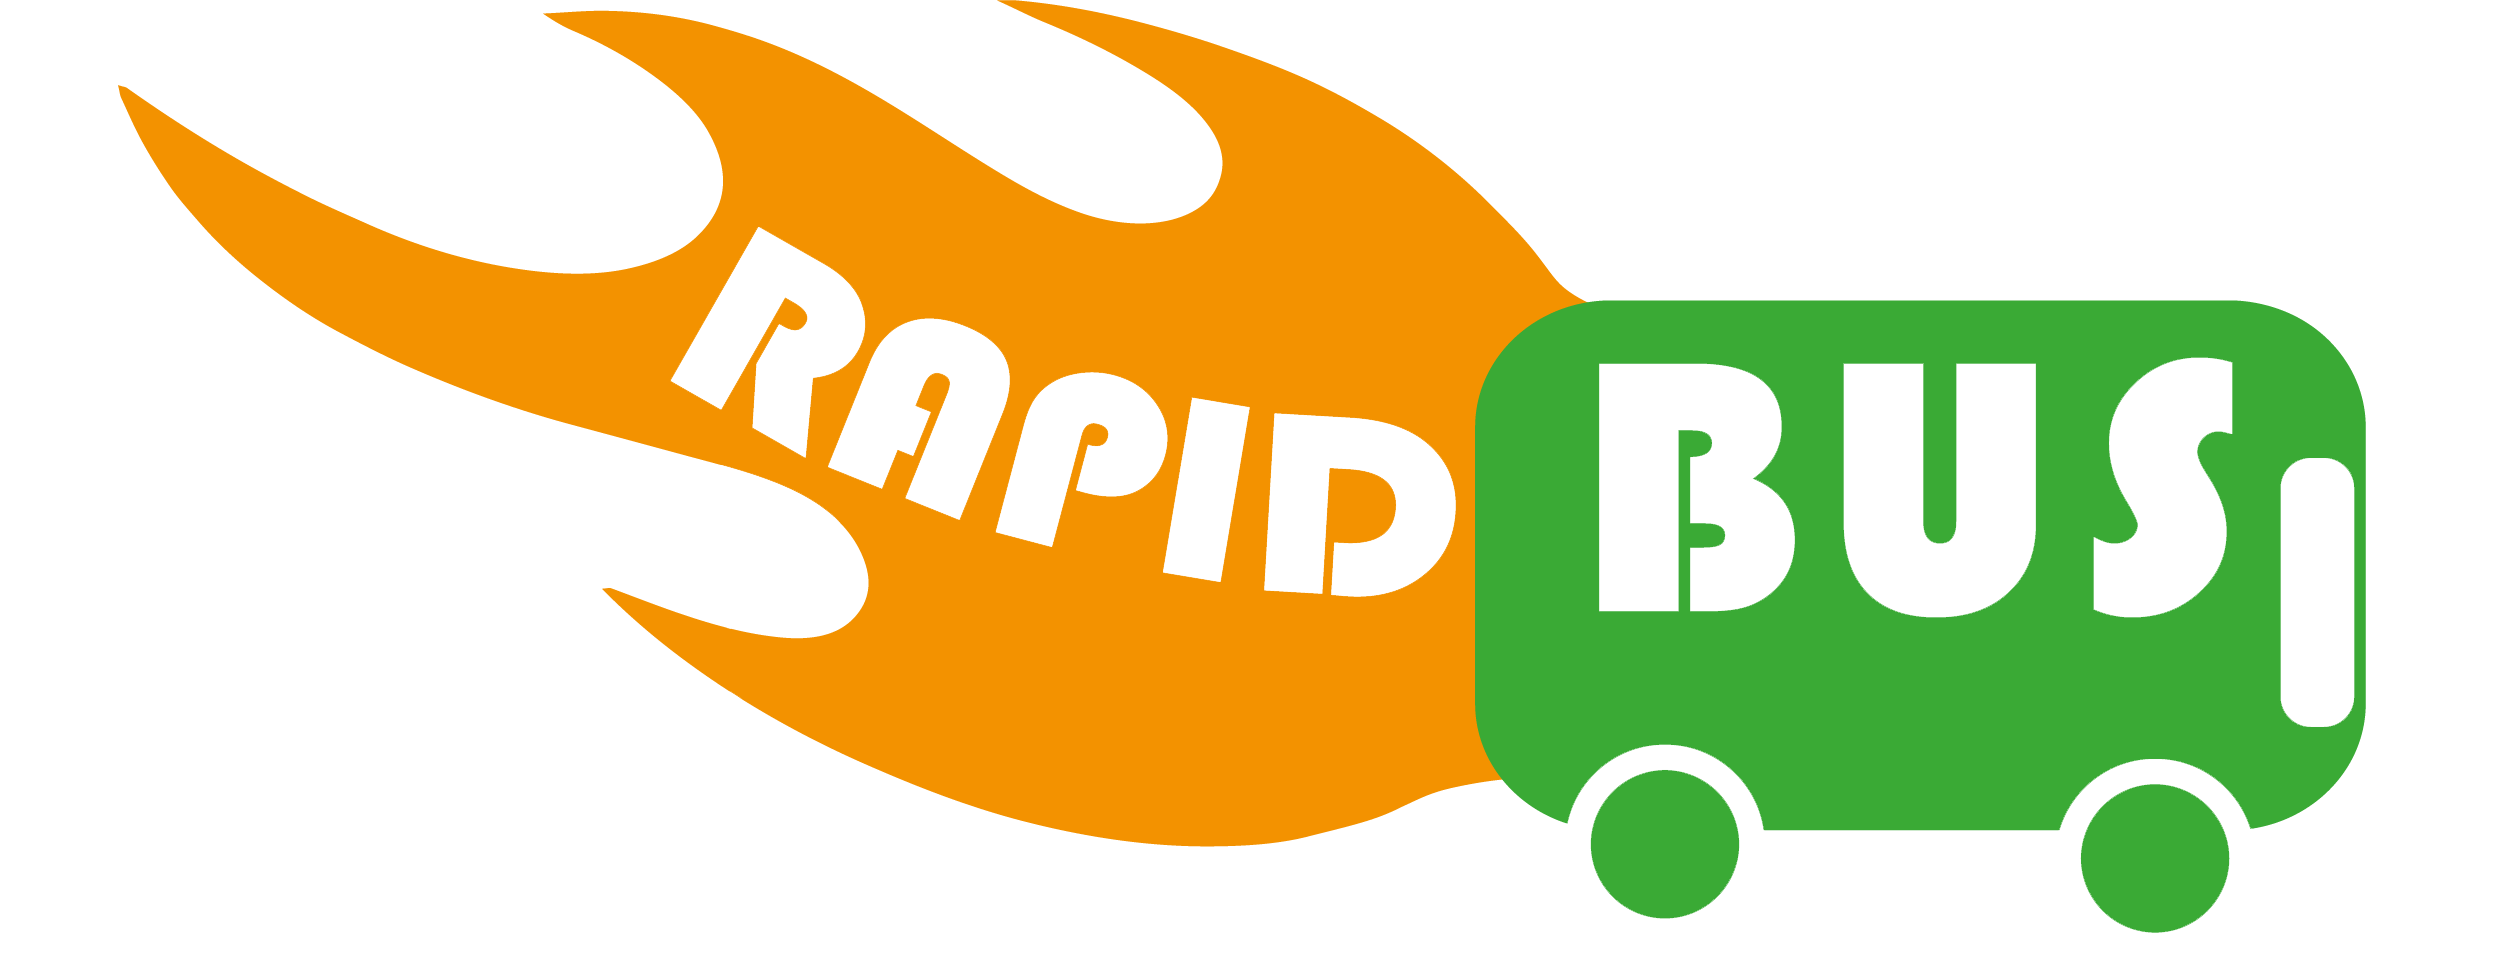 RapidBus